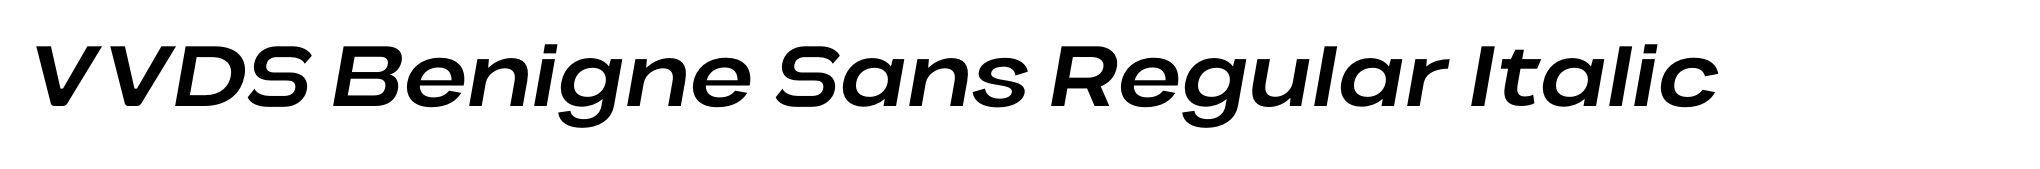 VVDS Benigne Sans Regular Italic image